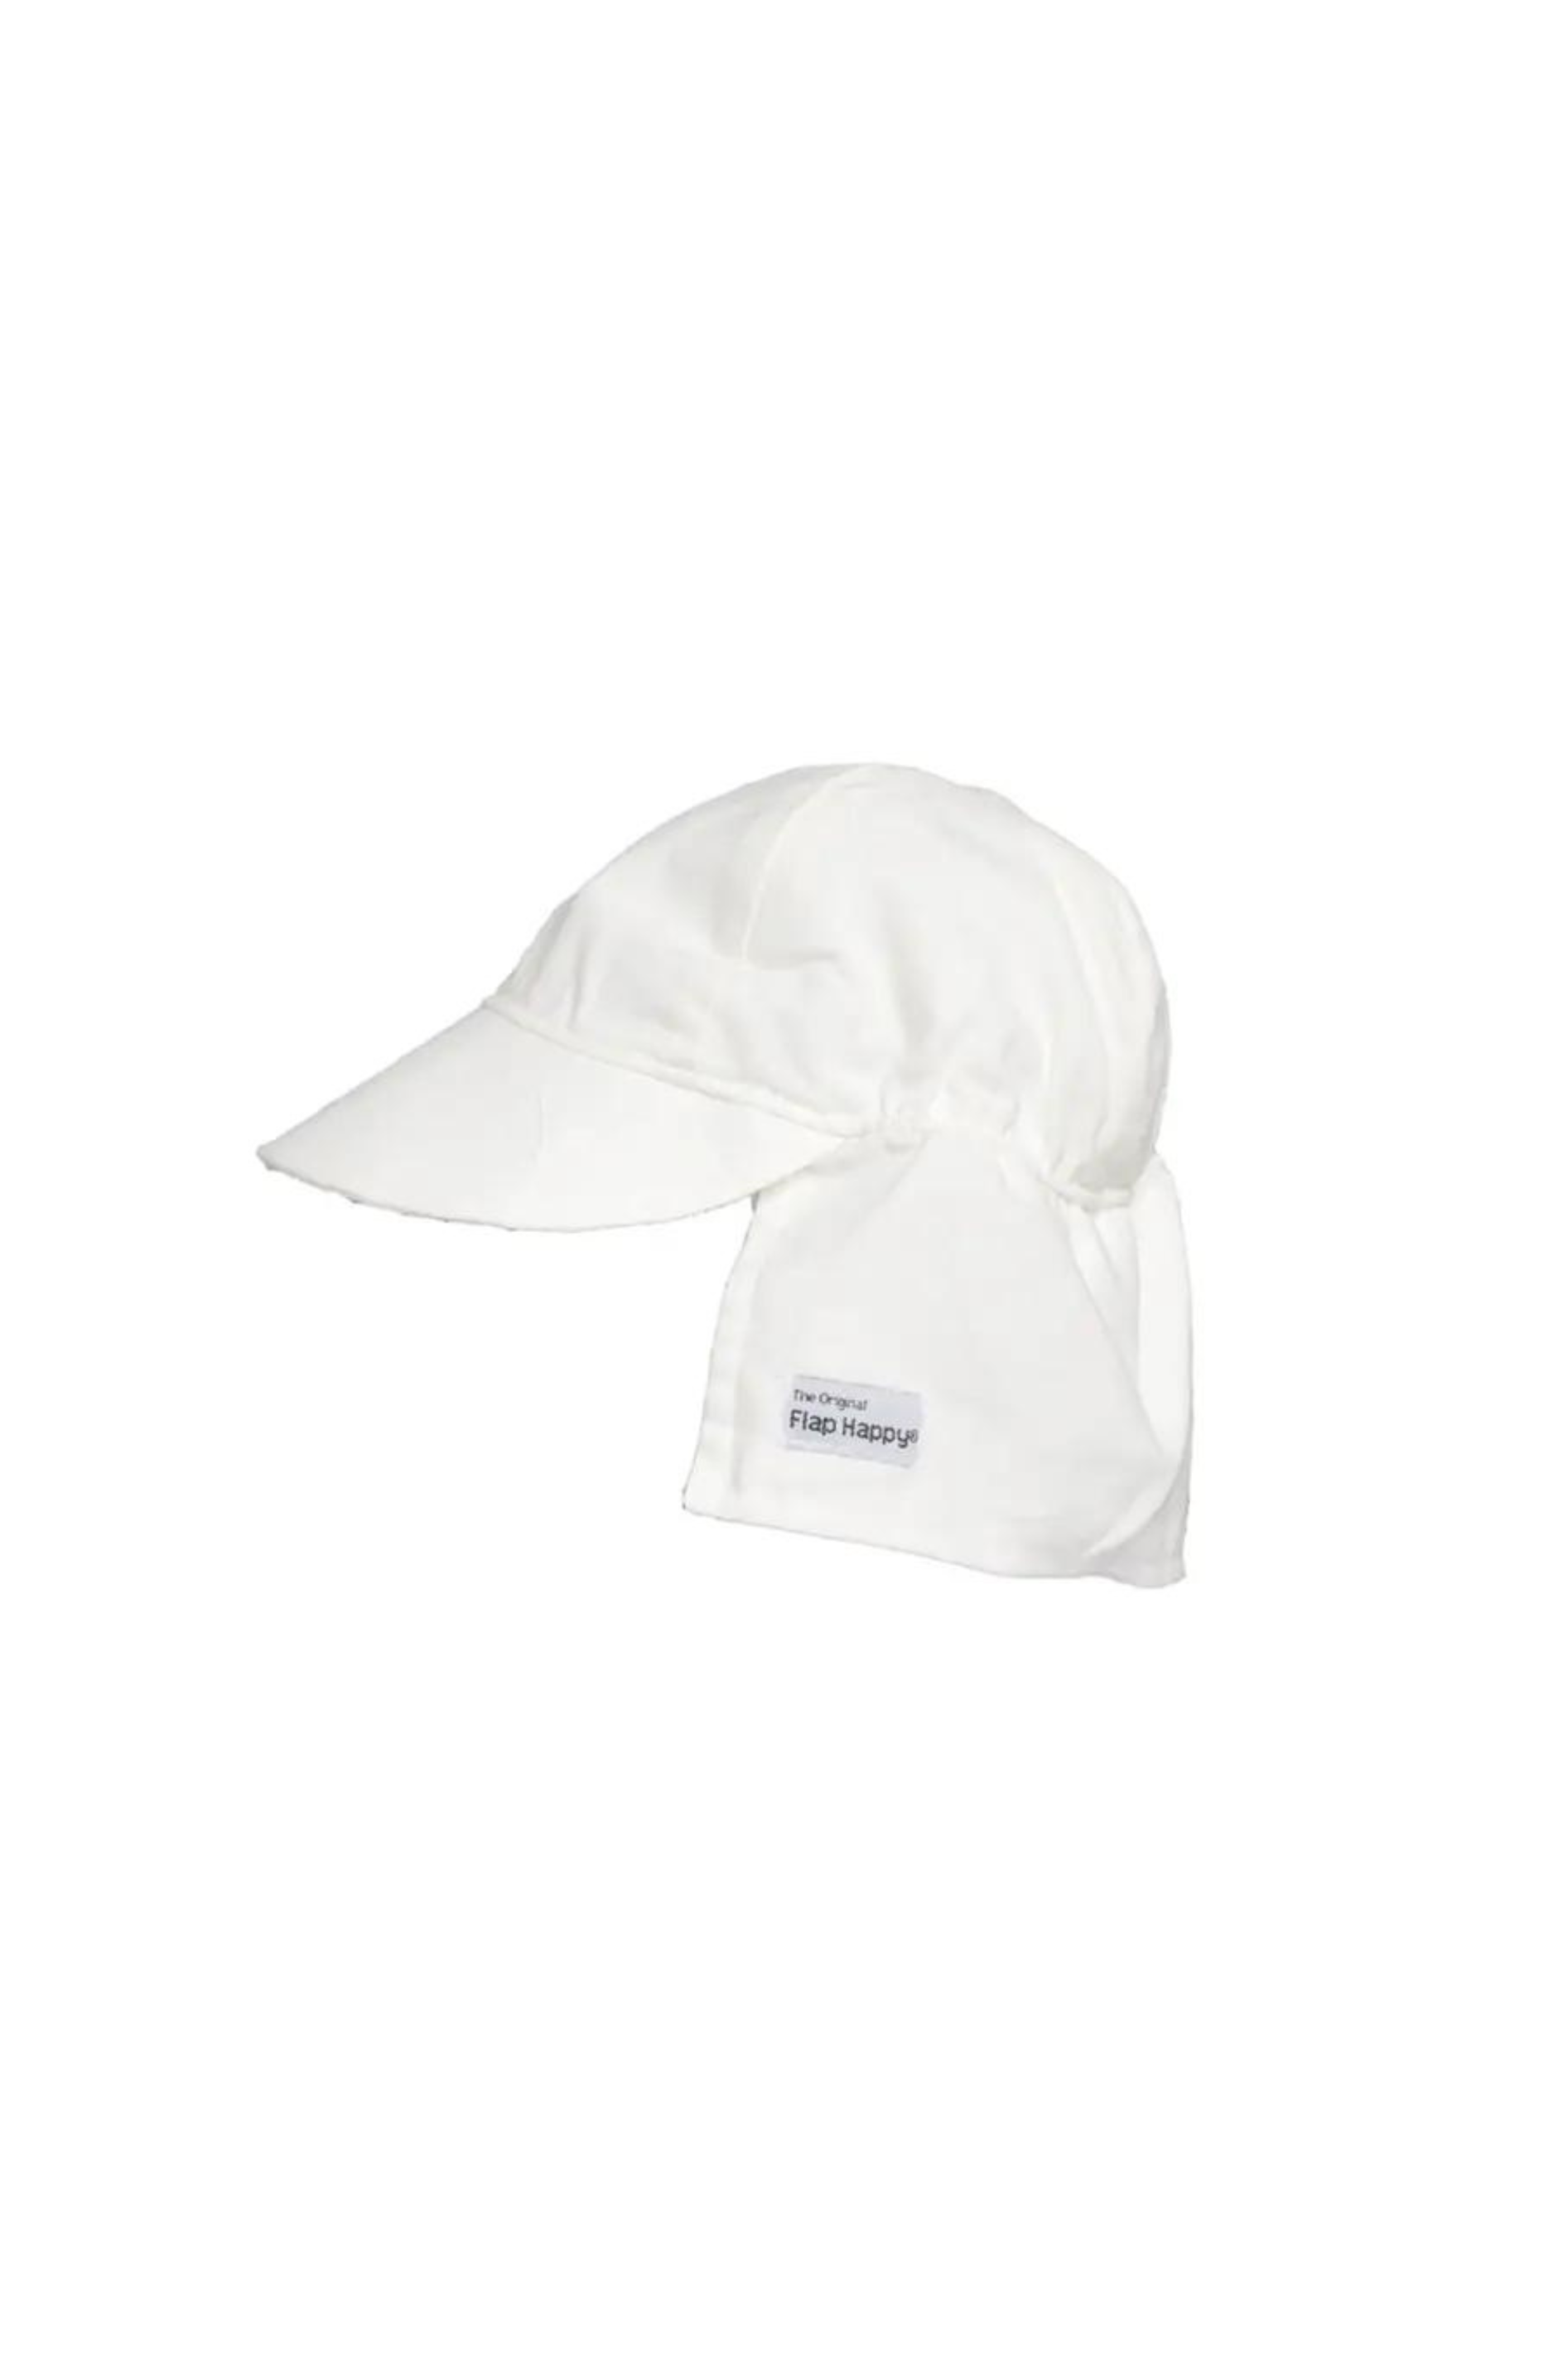 Flap Happy - UPF 50+ Original Flap Hat - White Medium (6-12mo)